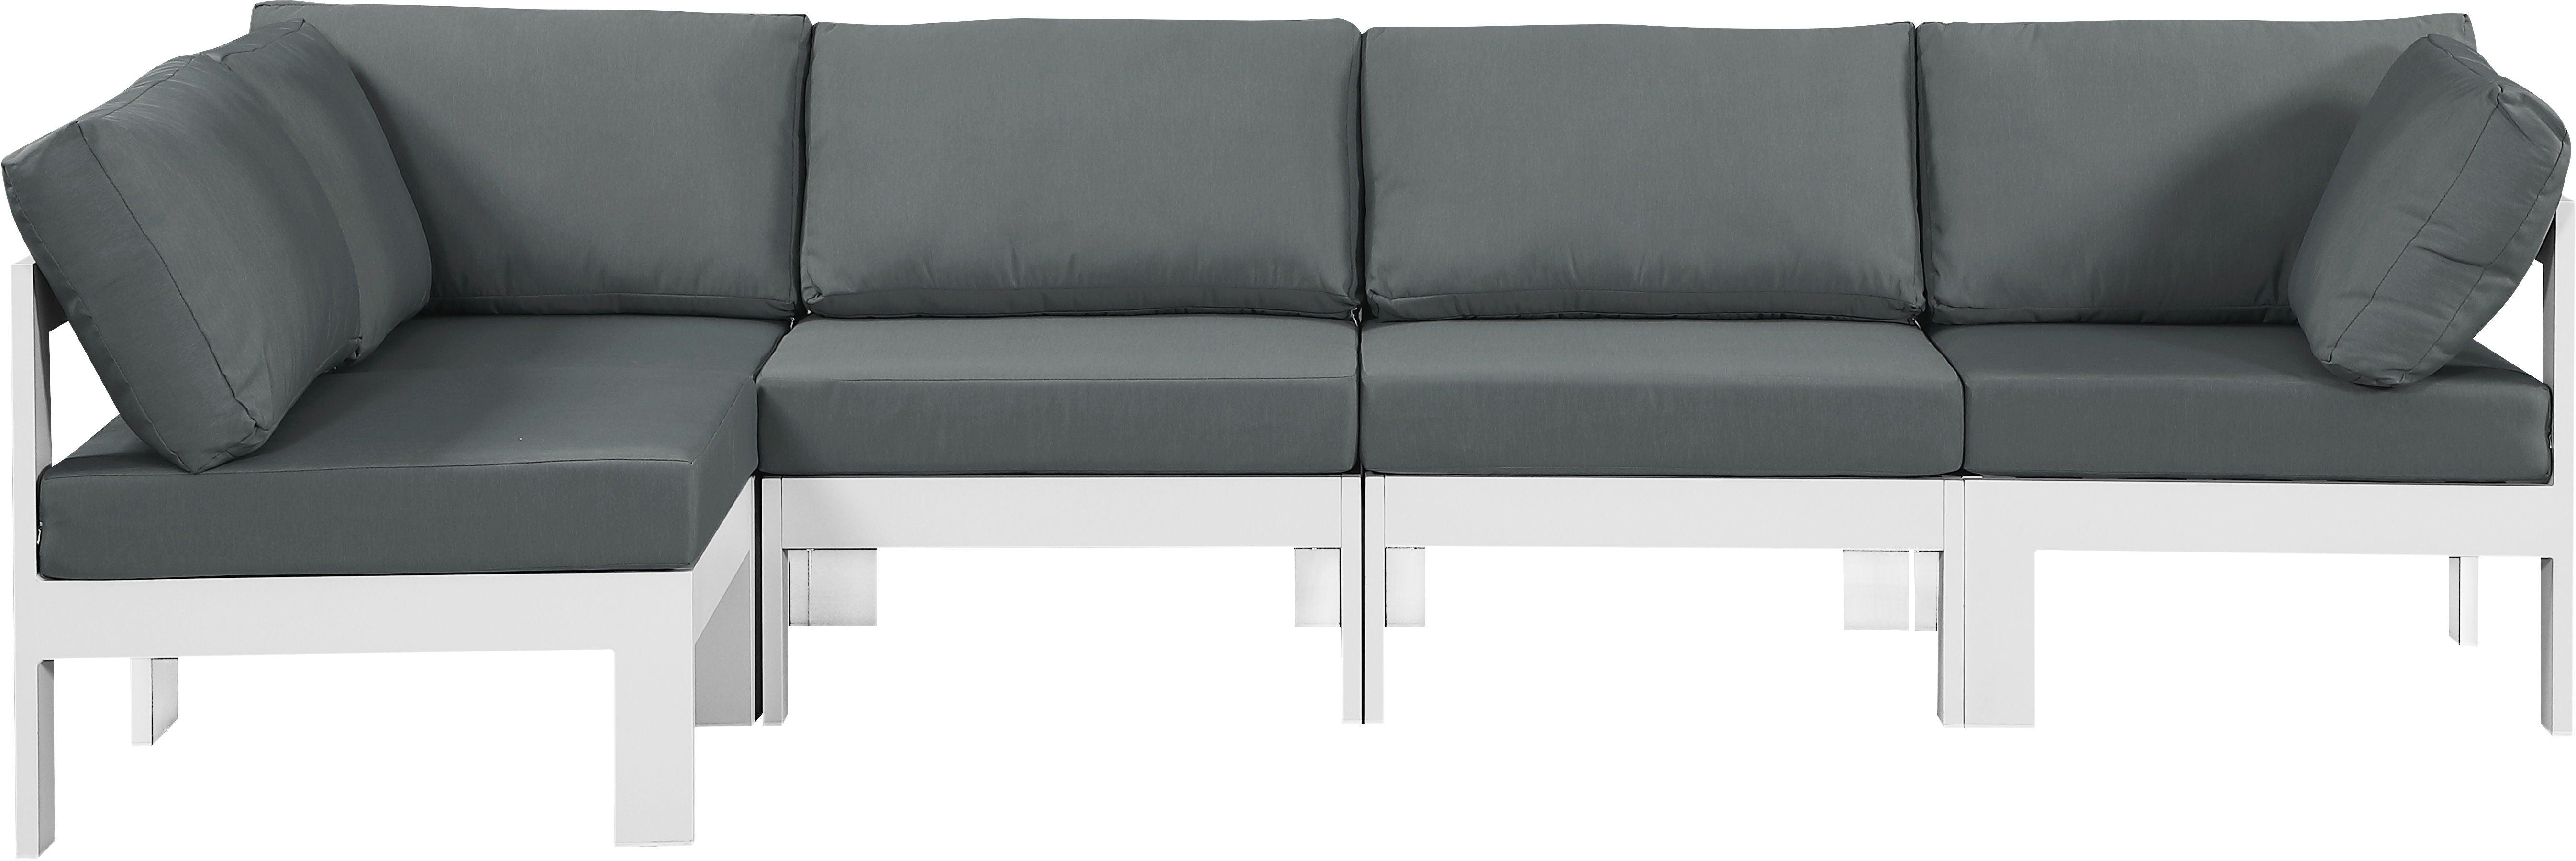 Meridian Furniture - Nizuc - Outdoor Patio Modular Sectional 5 Piece - Grey - Fabric - 5th Avenue Furniture